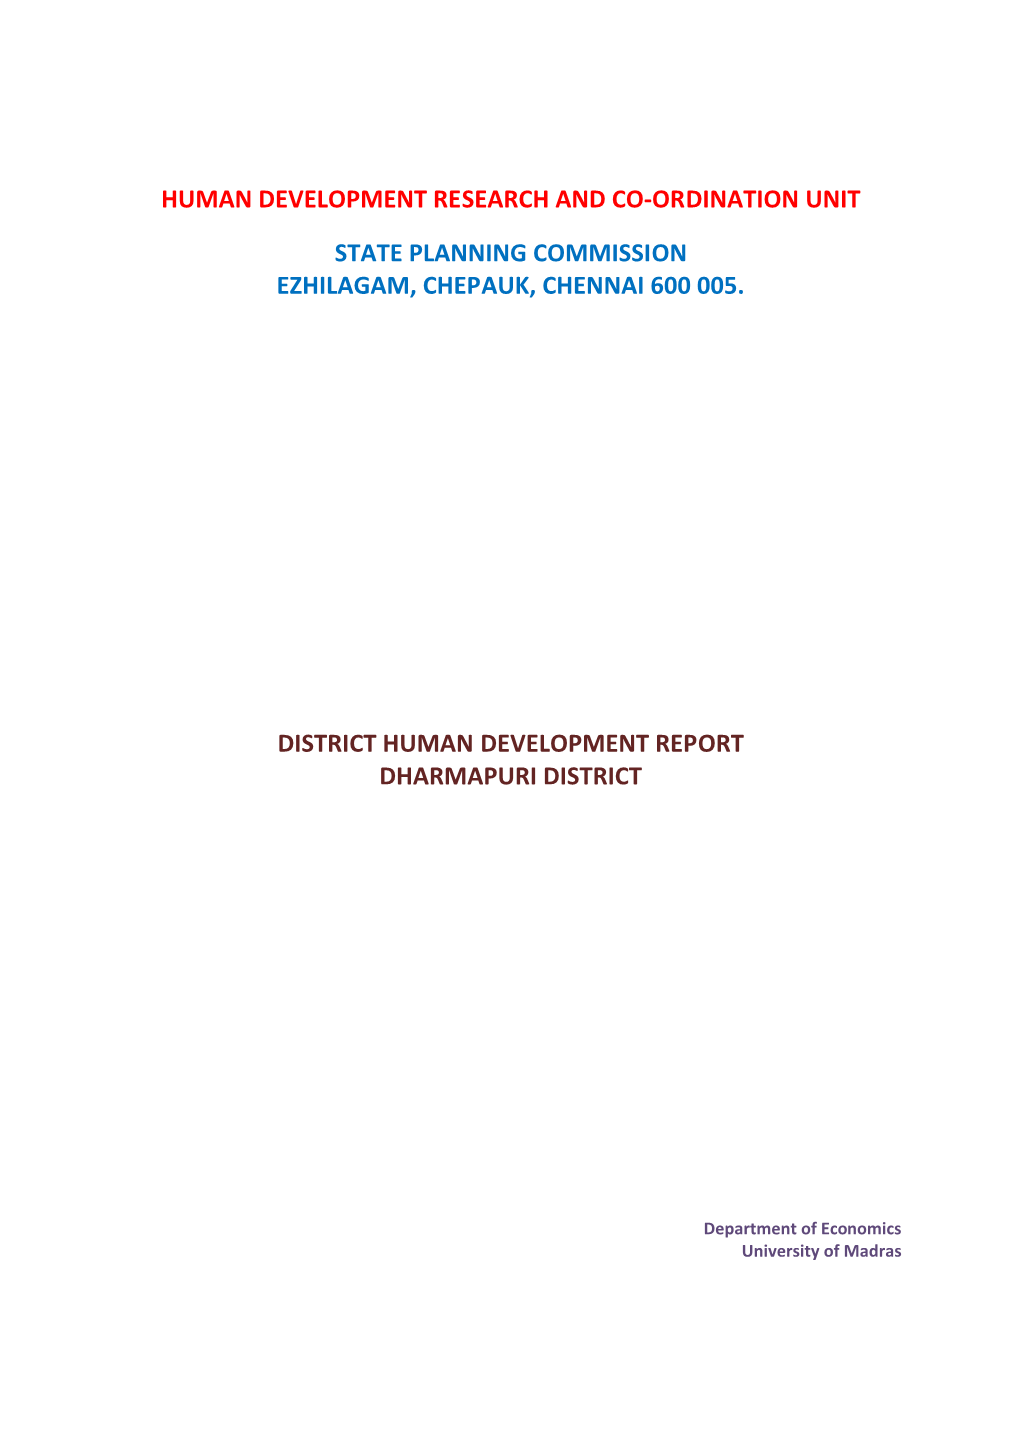 District Human Development Report Dharmapuri District